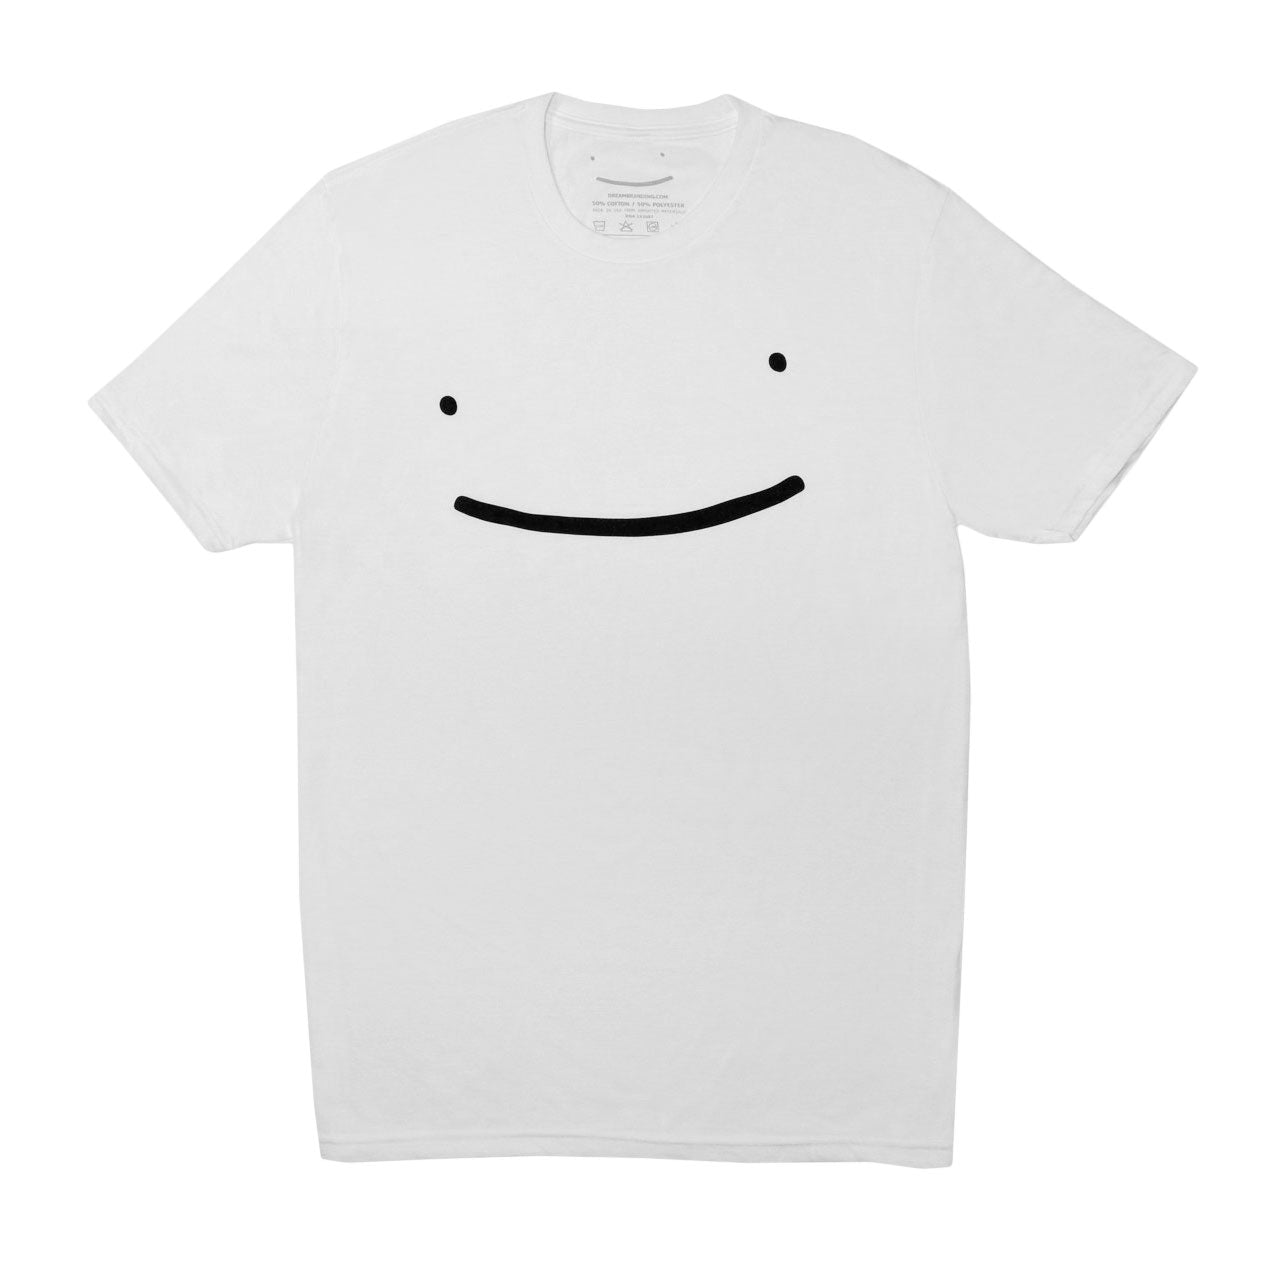 Dream Smile T-Shirt